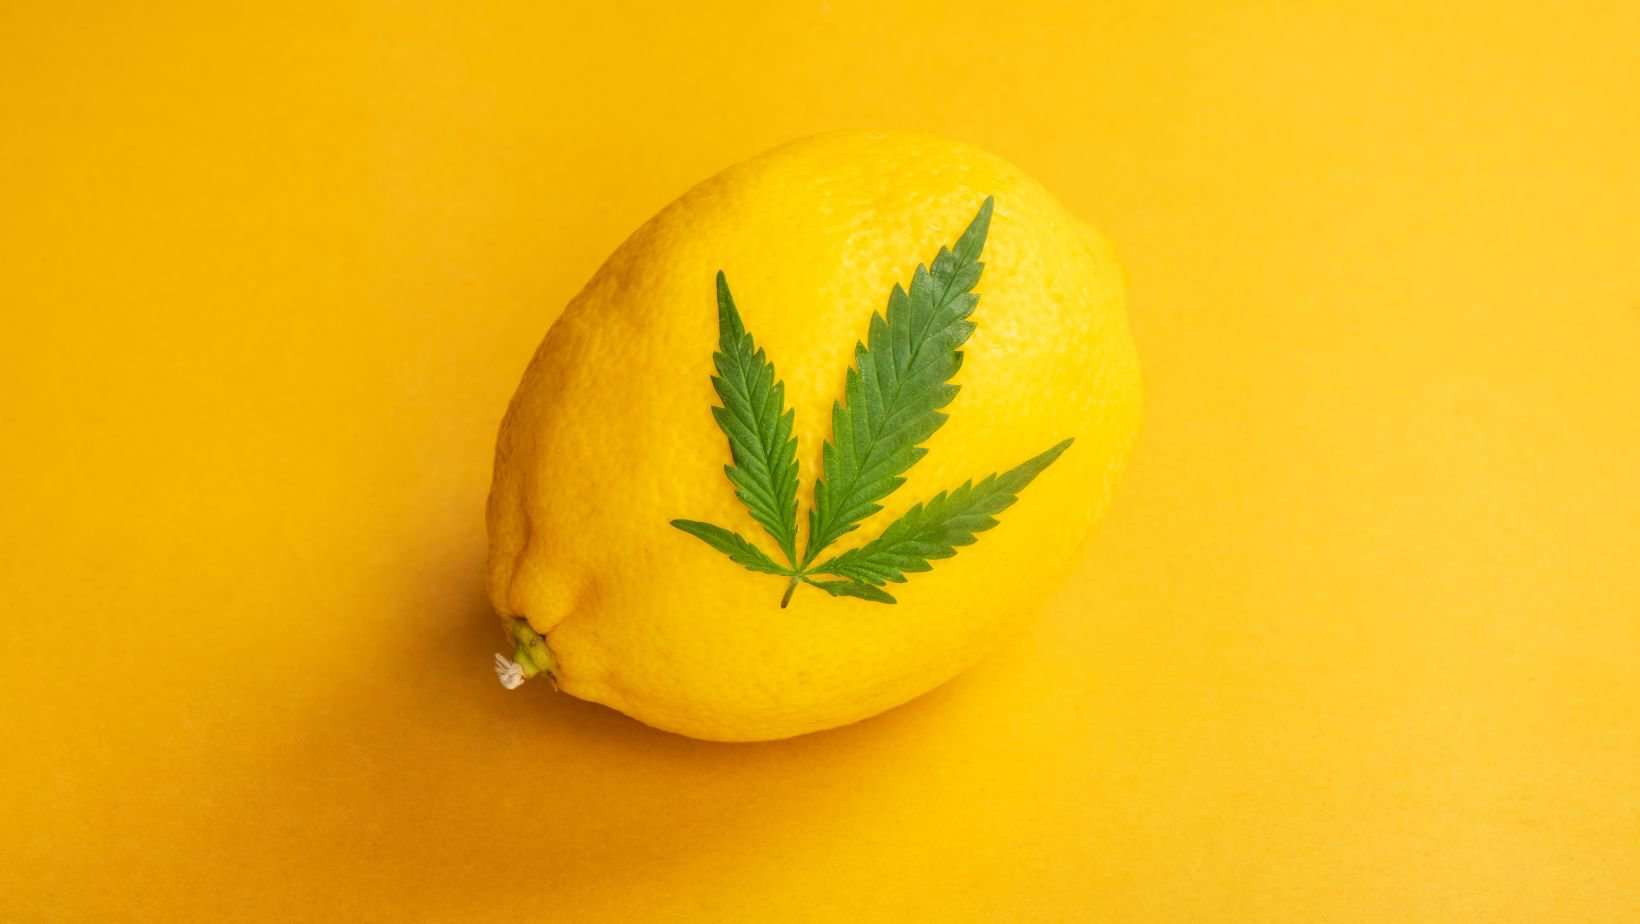 A lemon alongside a cannabis hemp leaf representing the limonene terpene in cannabis.